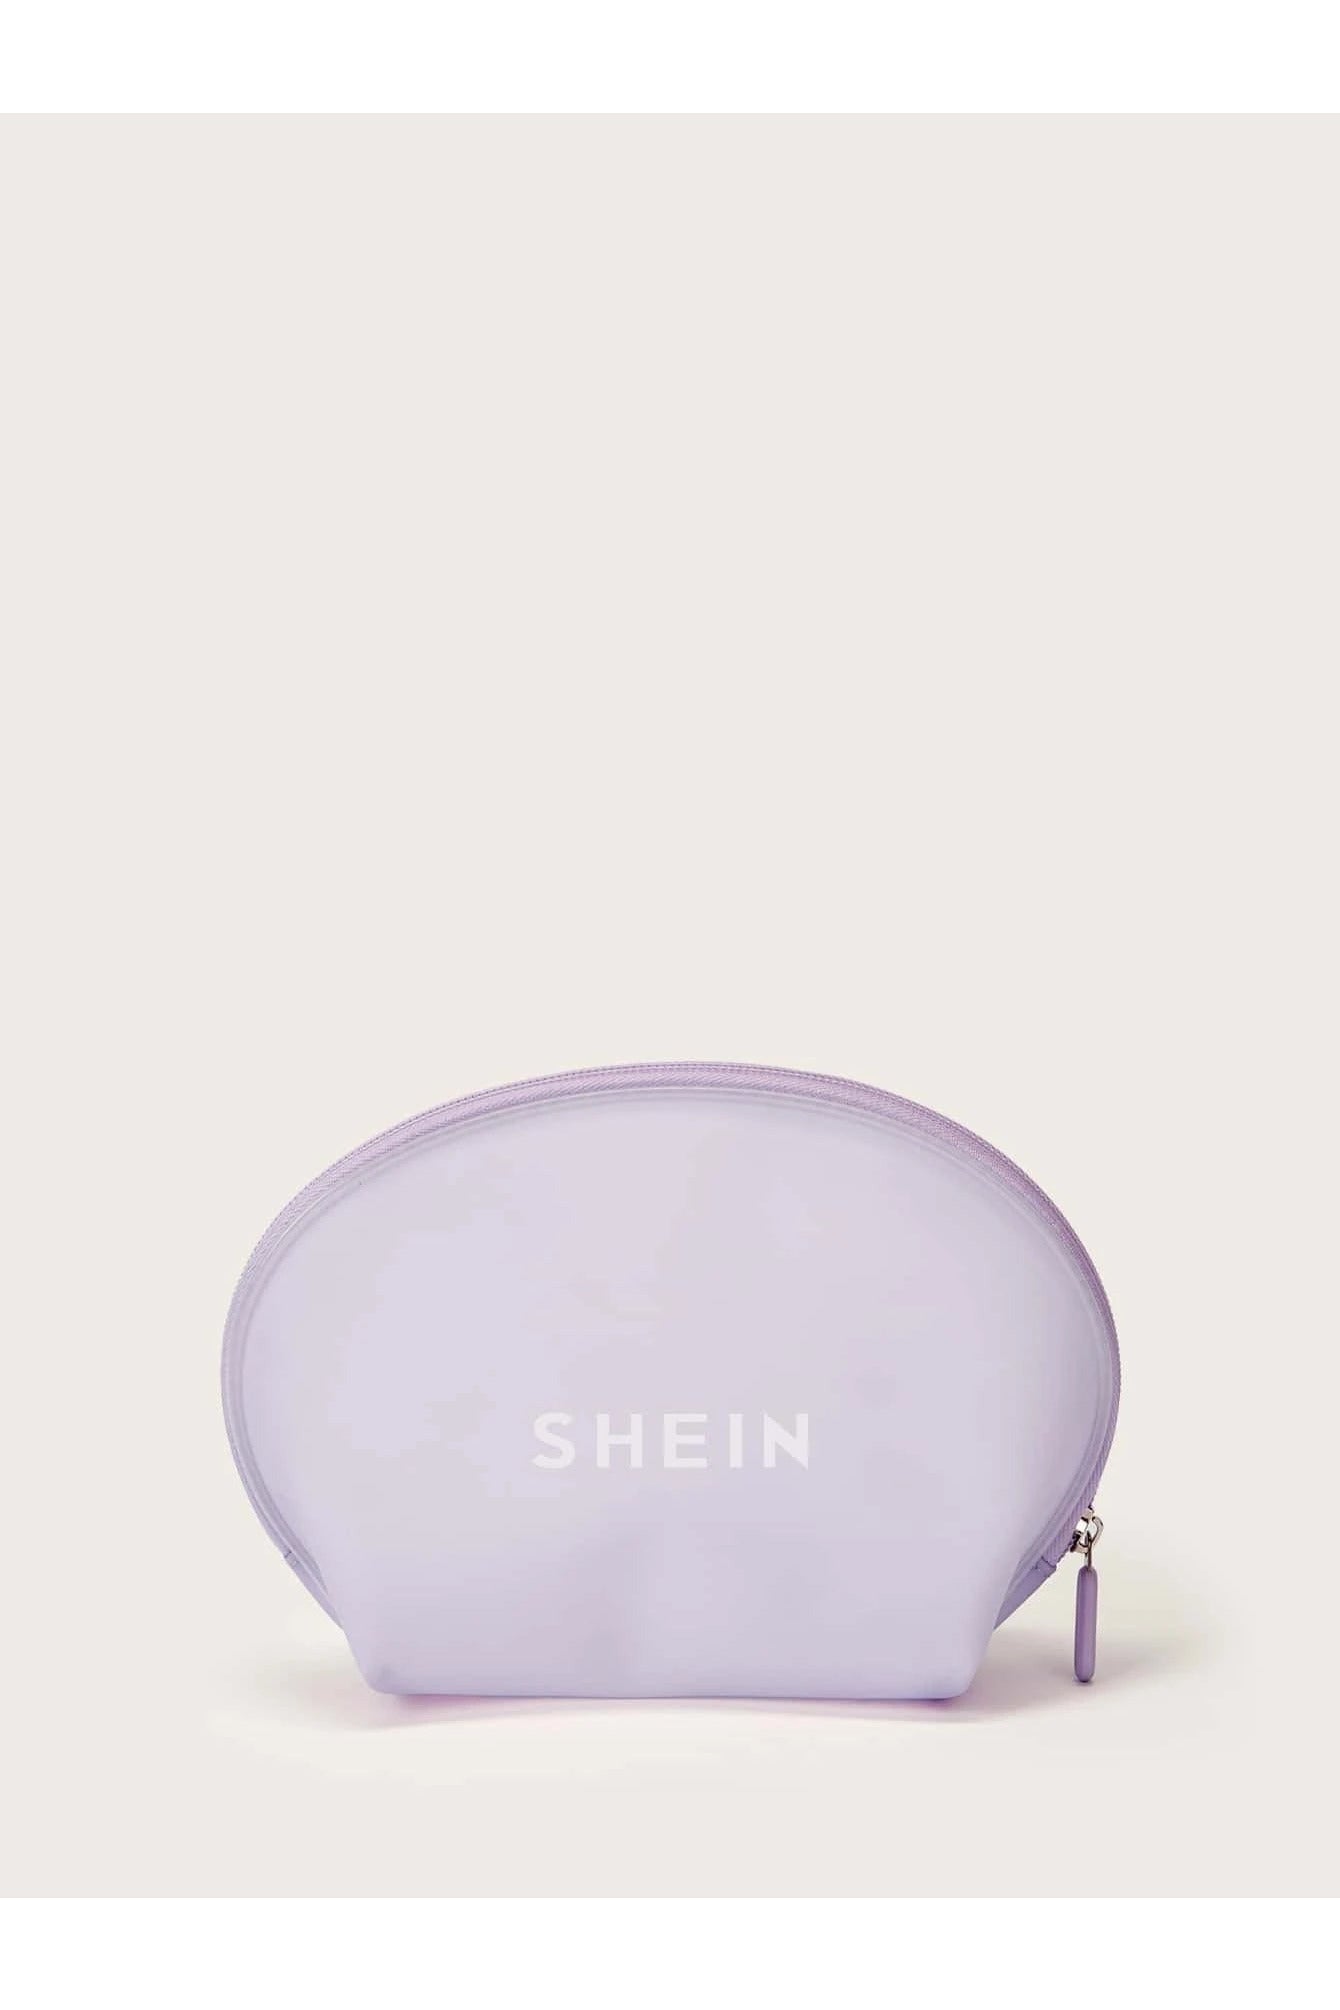 Buy SHEIN 1pc Floral Pattern Makeup Bag in Pakistan